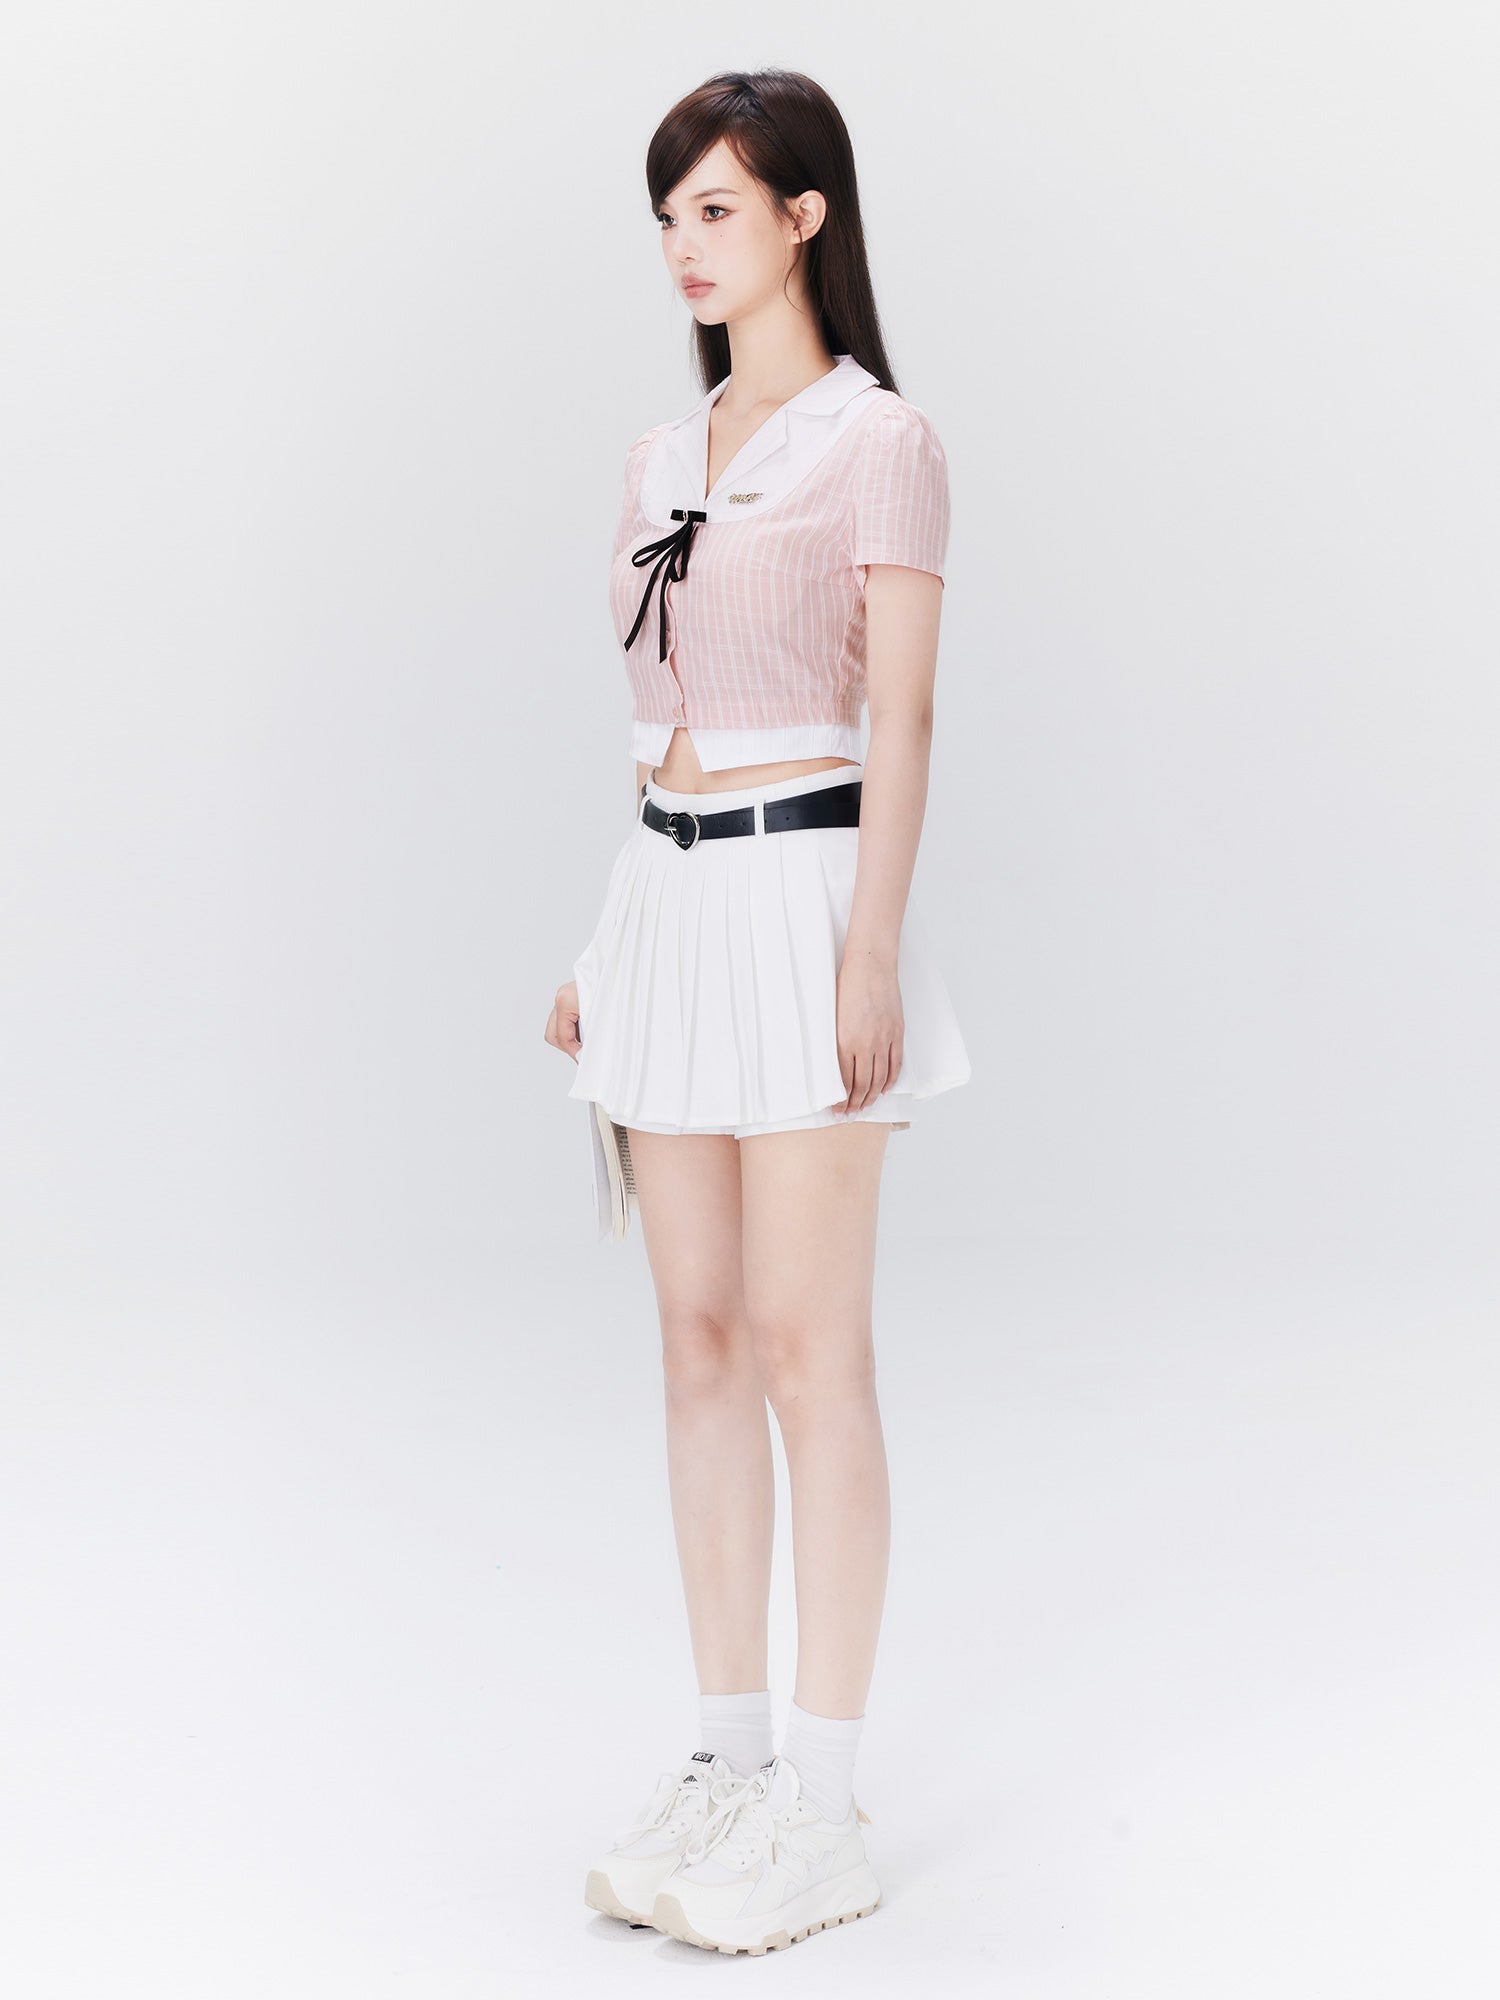 College Wind Bowknot Pink Waist Slimming Shirt Pure Desire Pleated Skirt Suit - Jam Garden